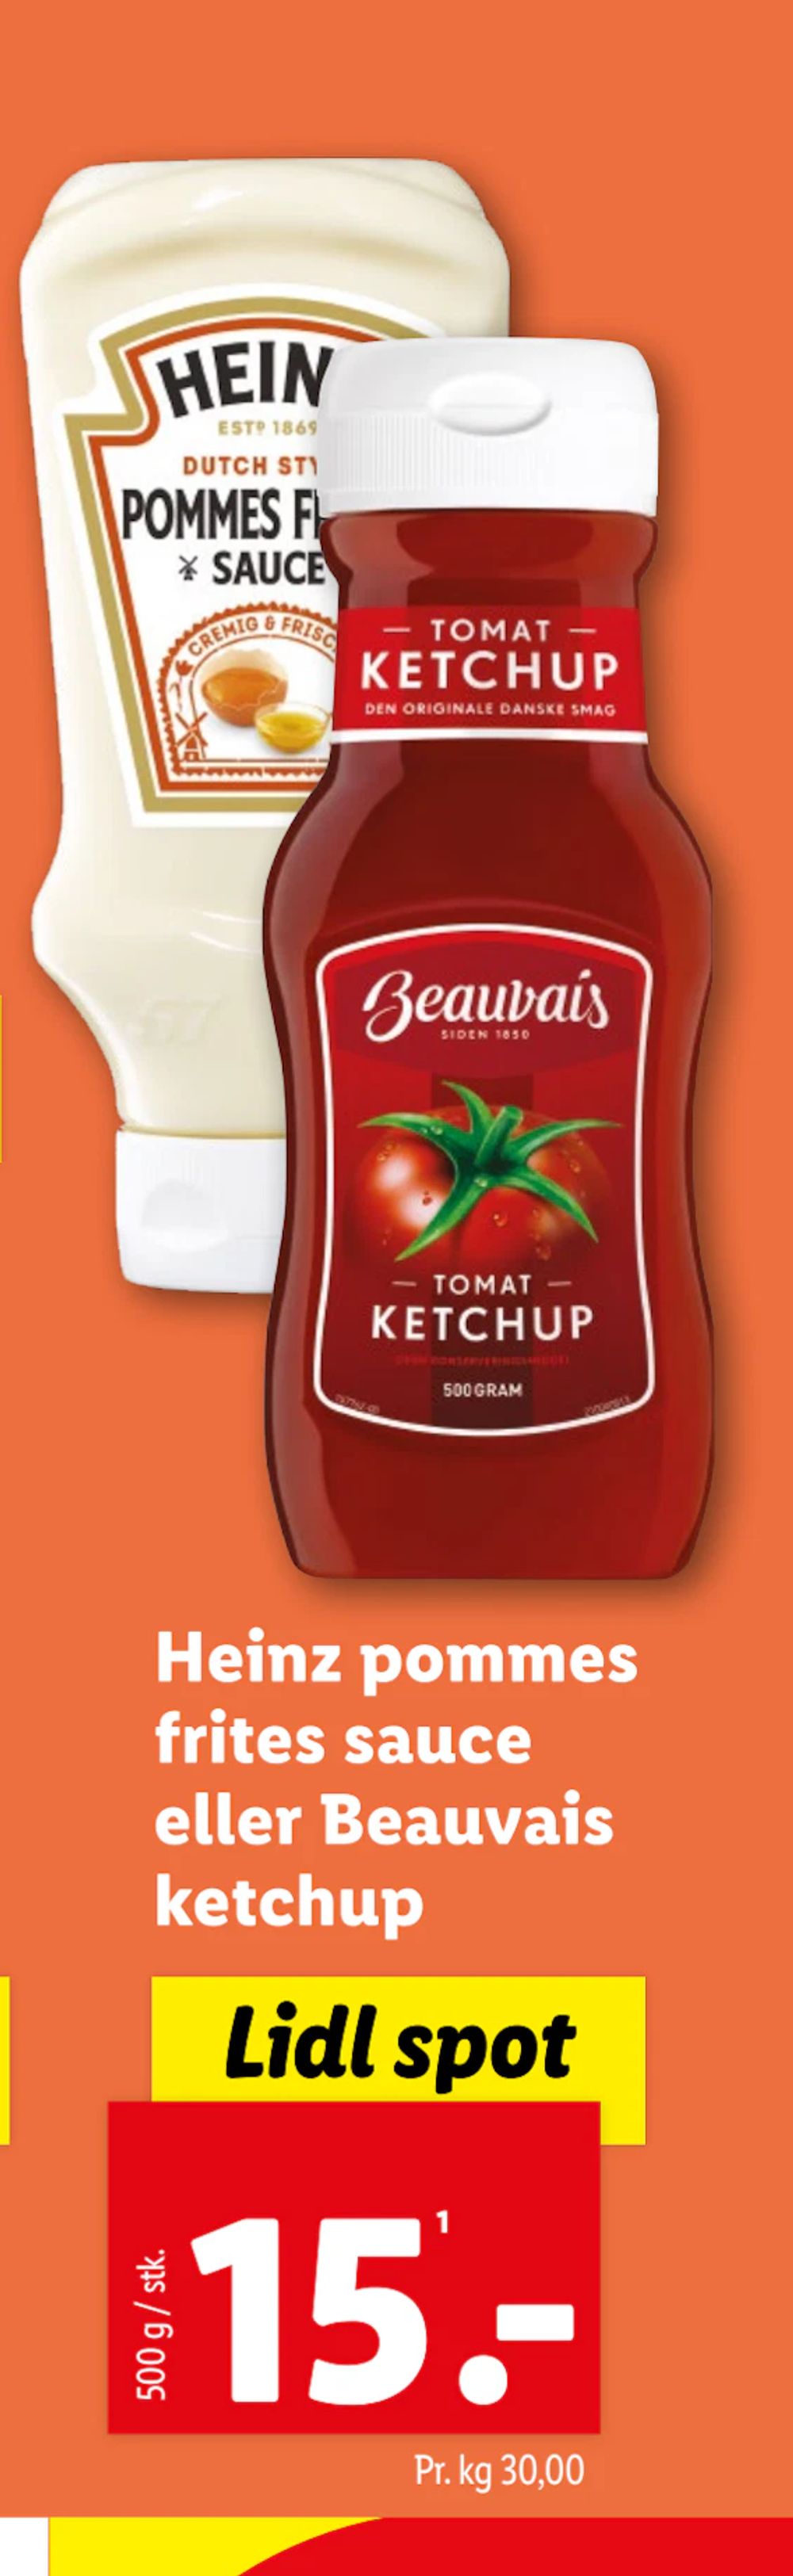 Tilbud på Heinz pommes frites sauce eller Beauvais ketchup fra Lidl til 15 kr.